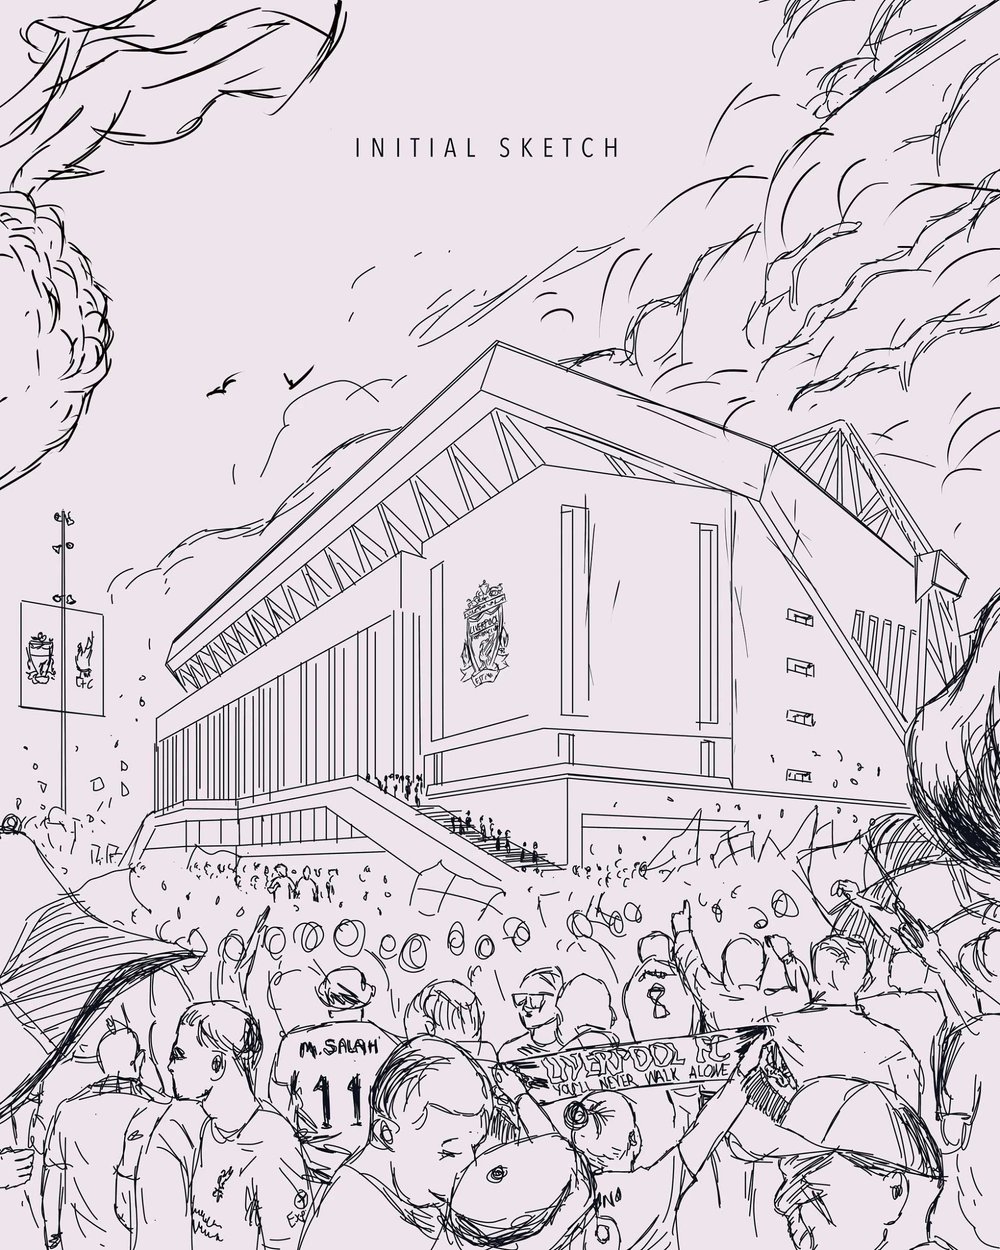 Anfield-Stadium-Illustration-Liverpool-Football-Club-Sketch.jpg